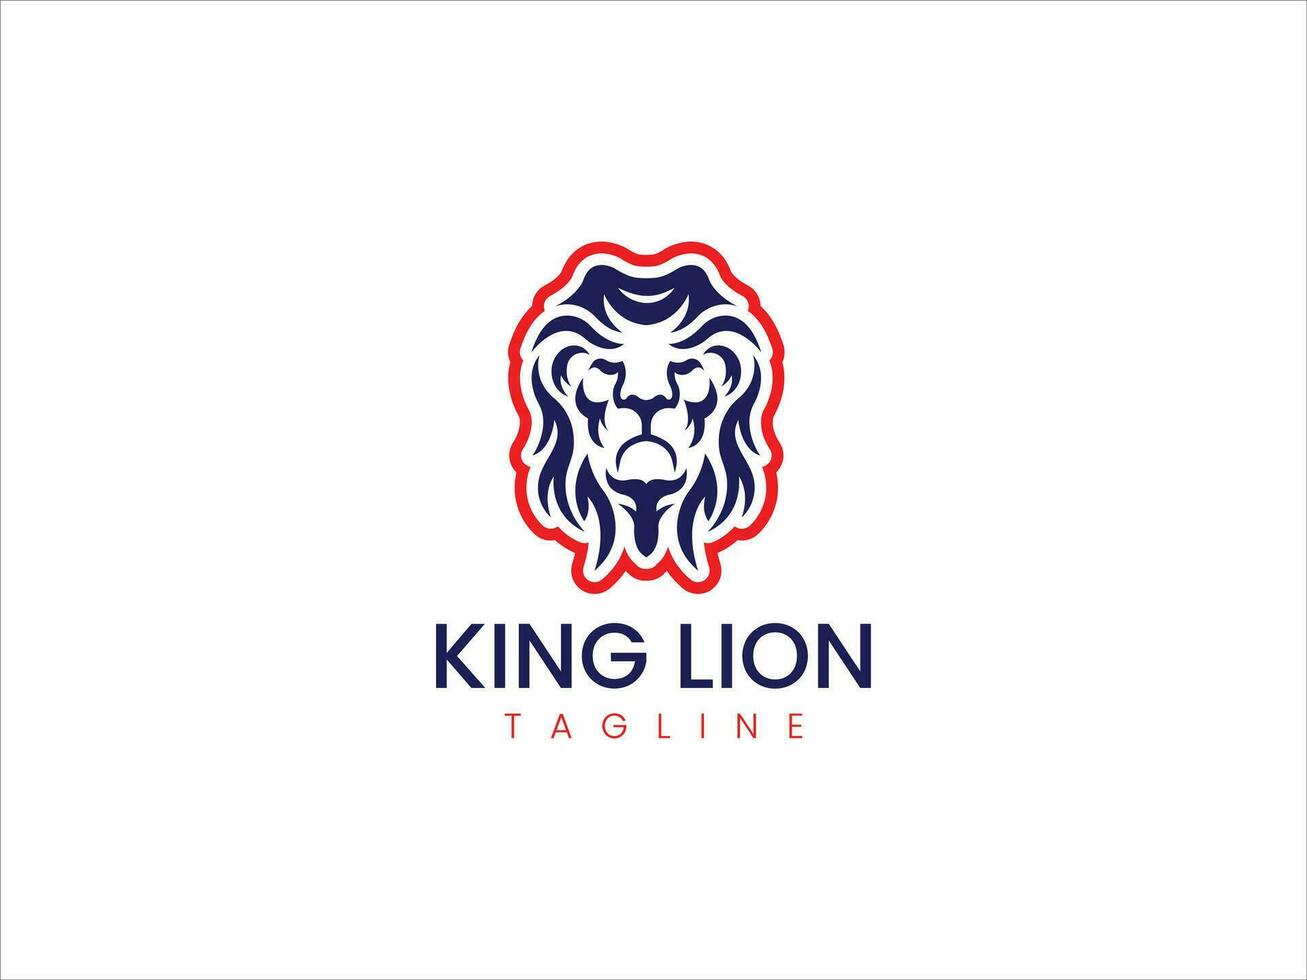 plantilla de vector de diseño de logotipo de cabeza de león